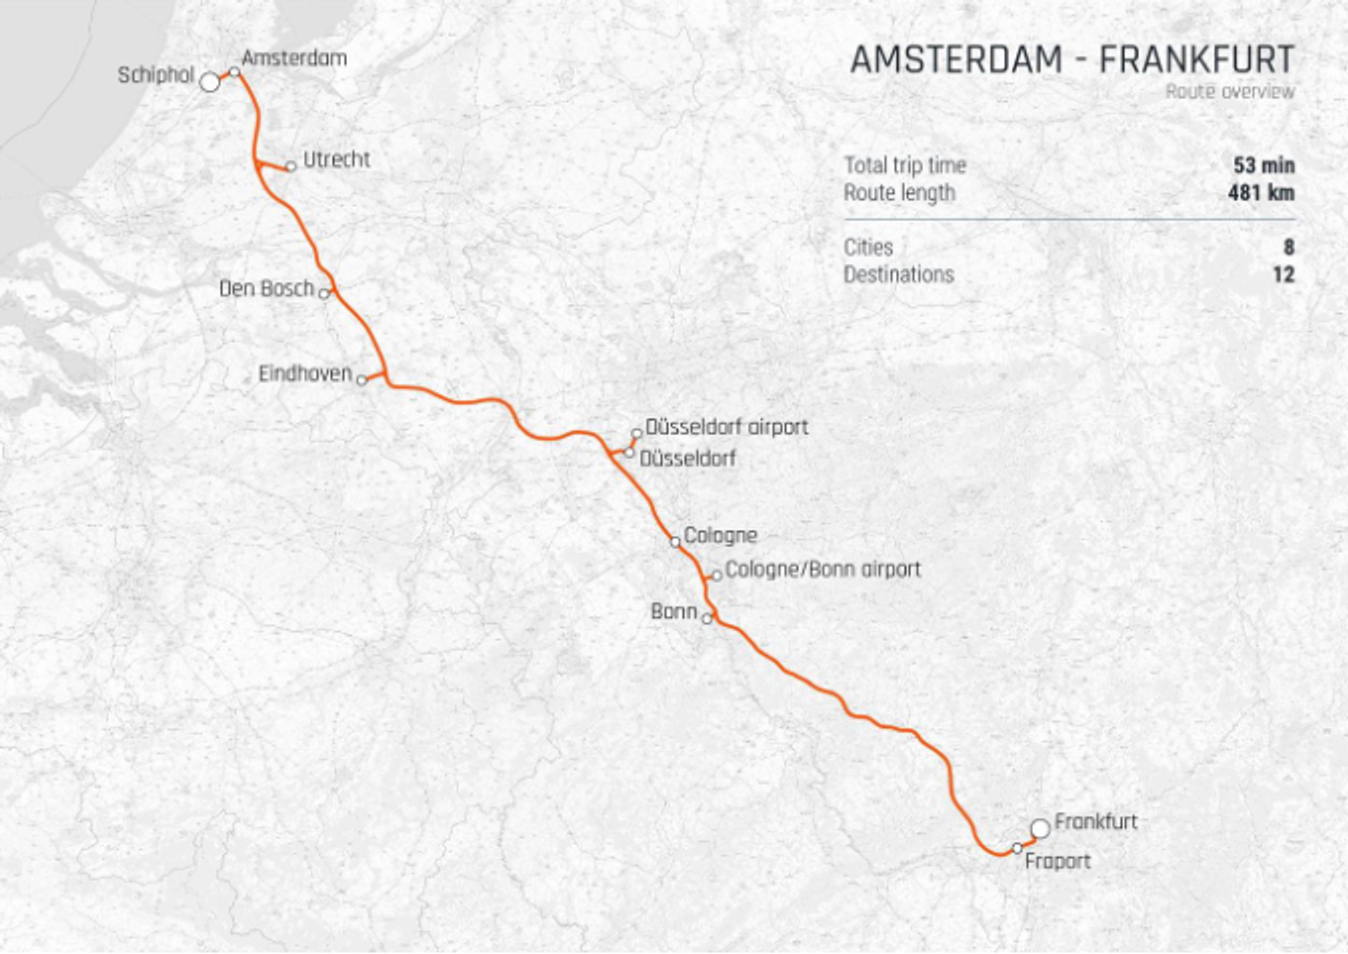 Proposed Amsterdam - Frankfurt route alignment.